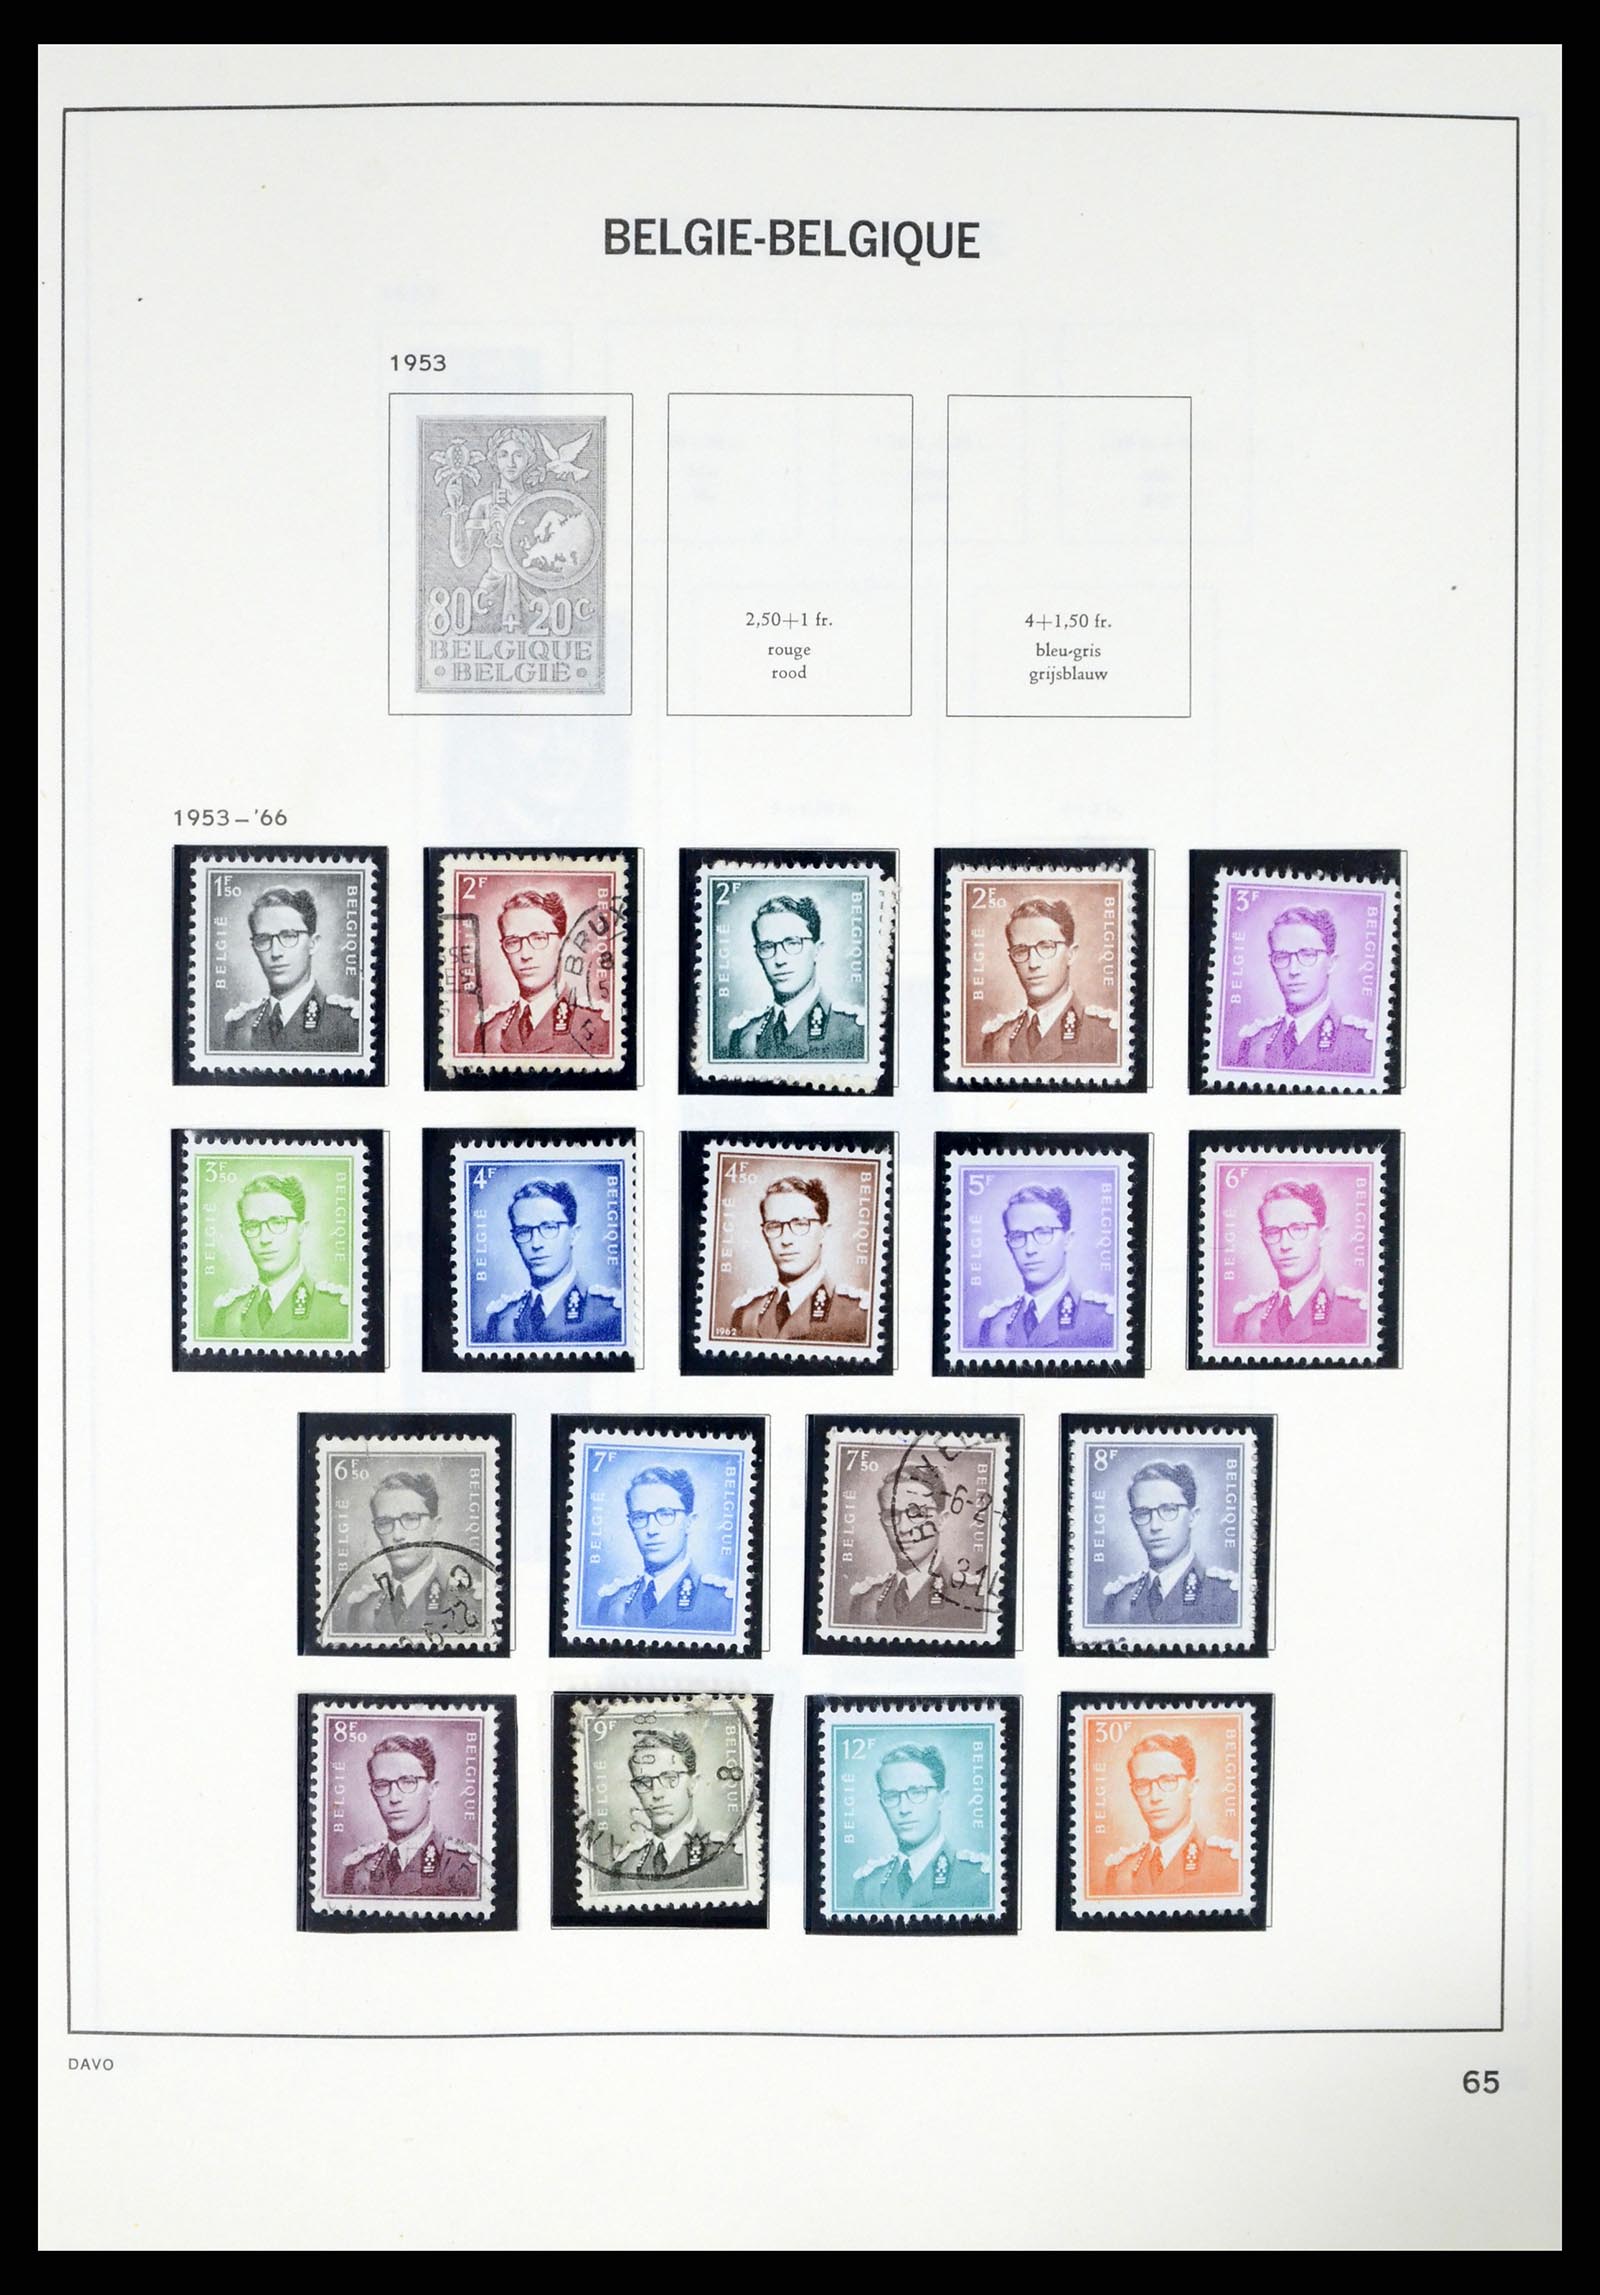 37367 062 - Stamp collection 37367 Belgium 1849-2003.